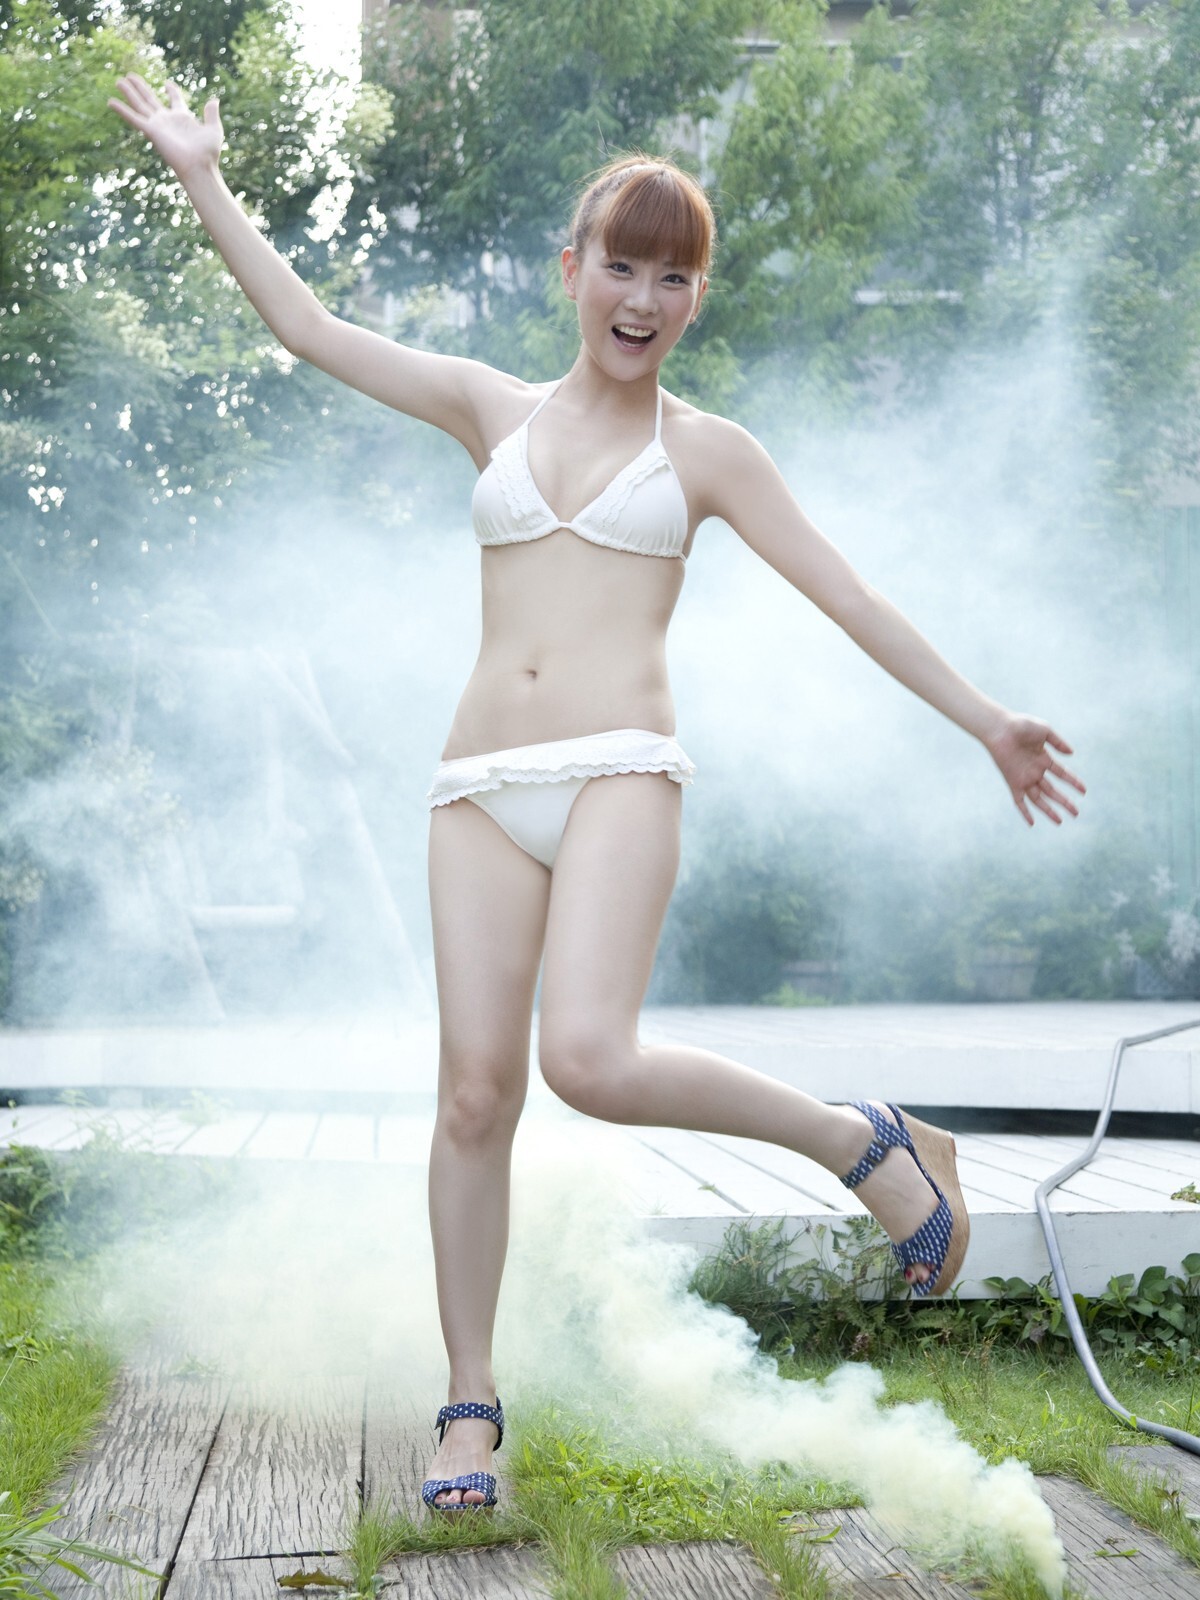 重盛さと美 [Sabra.net] StrictlyGirls  日本性感美女图片